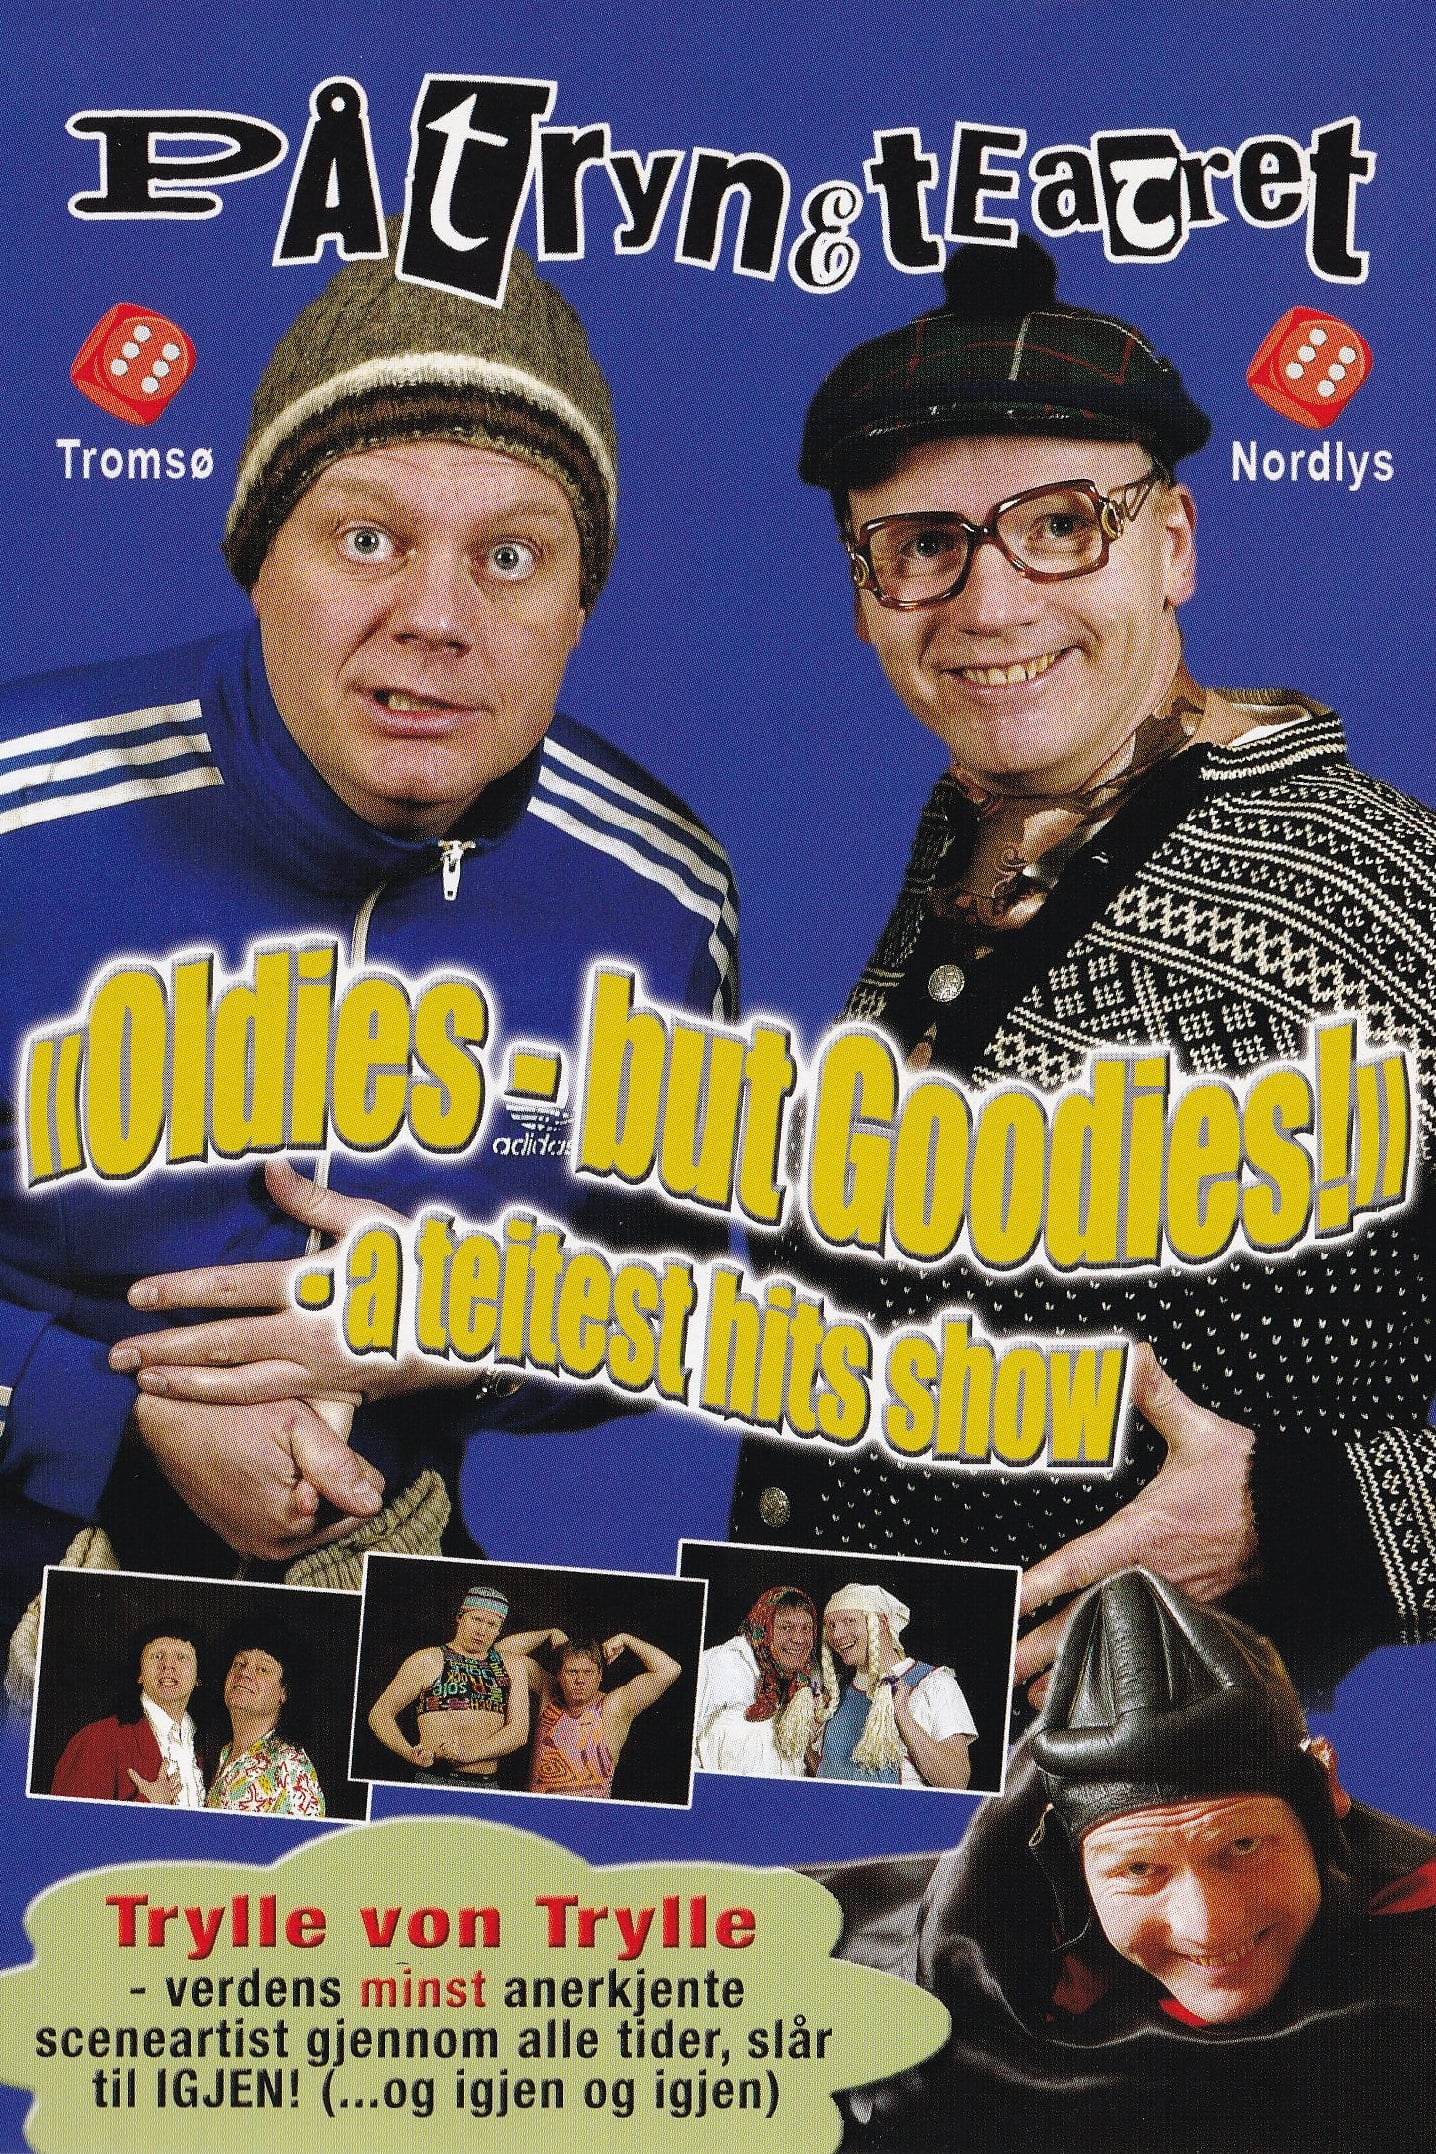 Påtryneteatret: "Oldies - but Goodies!" - A teitest hits show